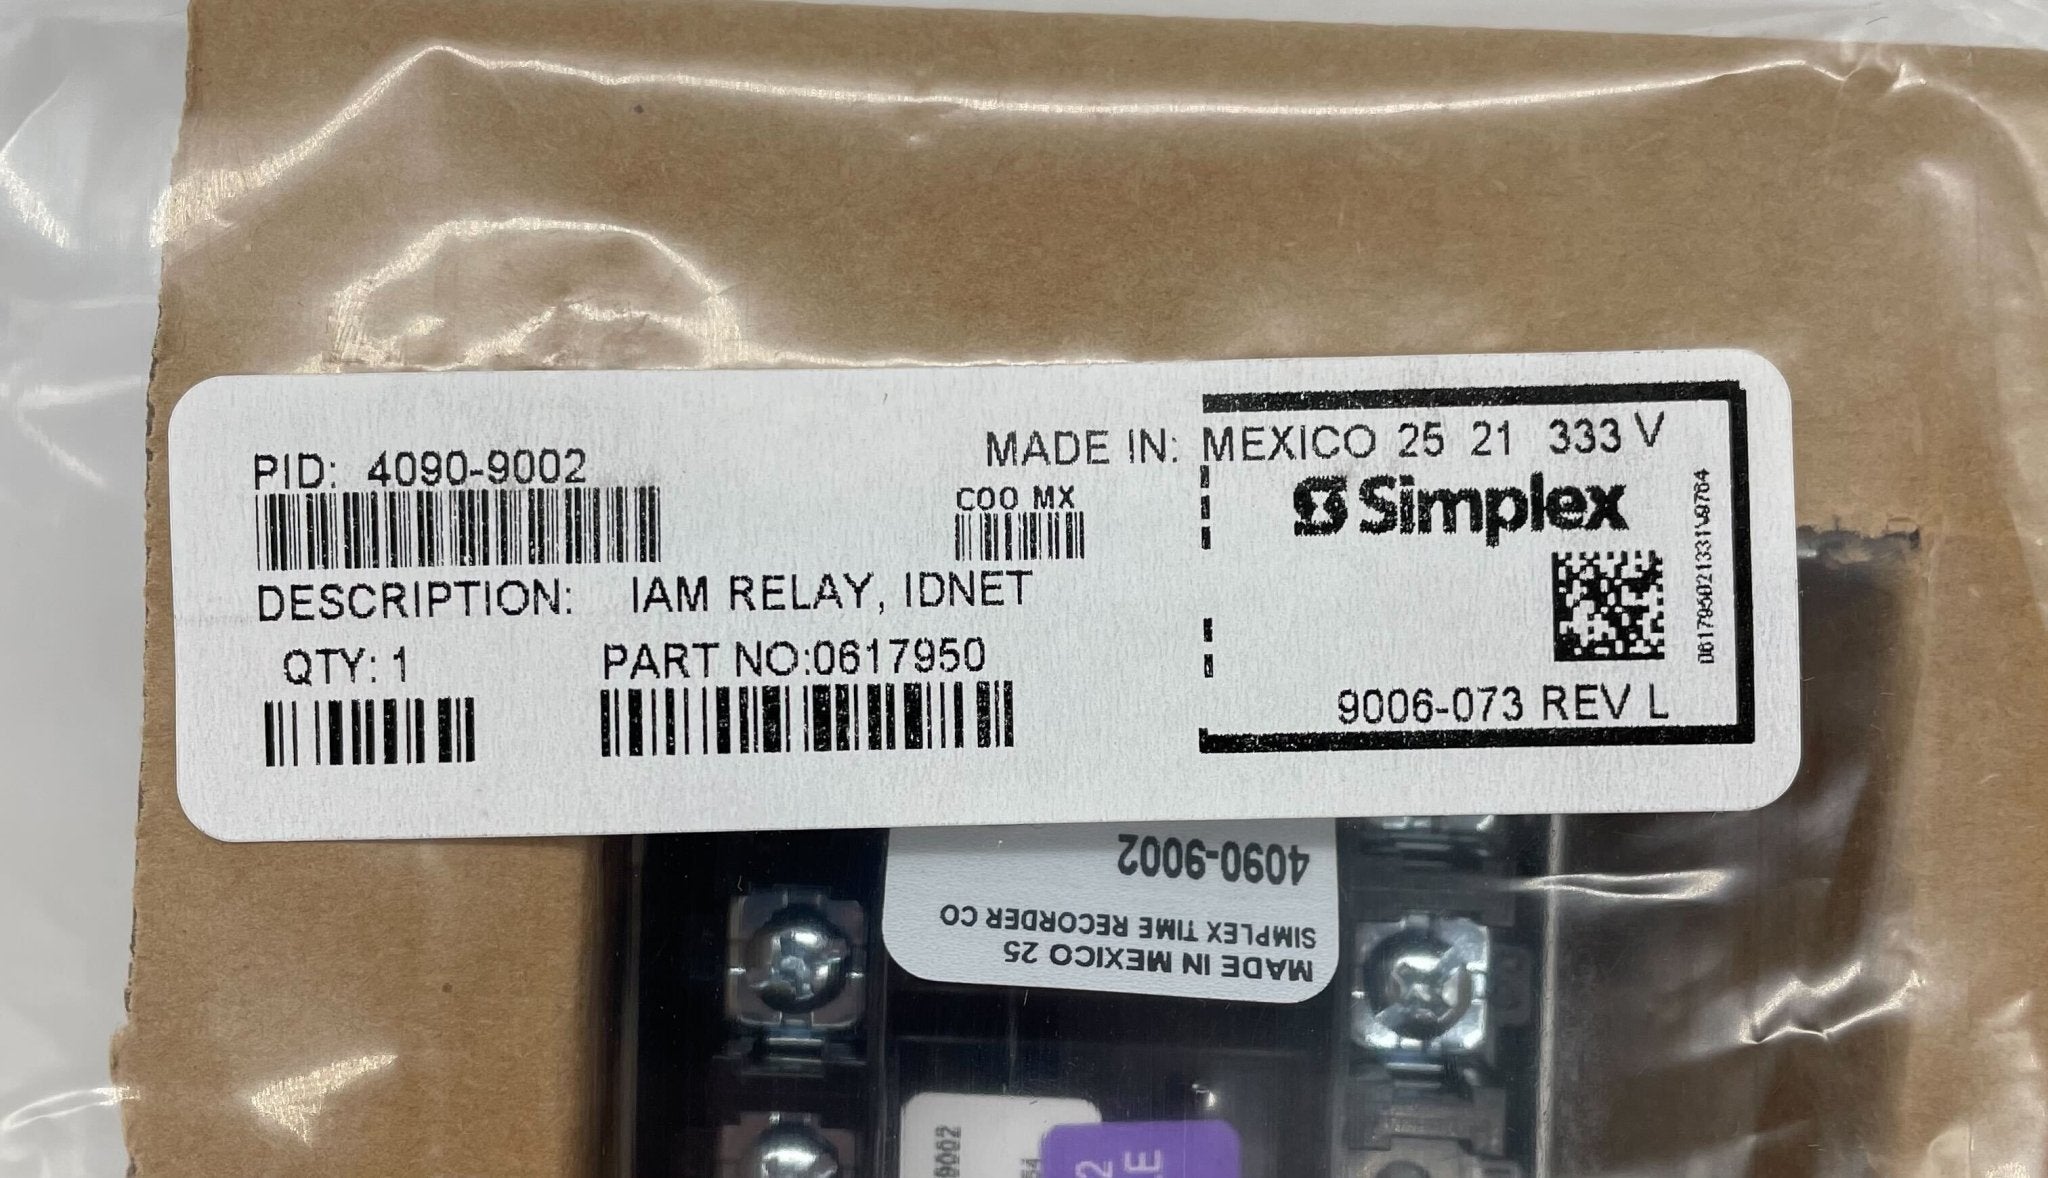 Simplex 4090-9002 - The Fire Alarm Supplier